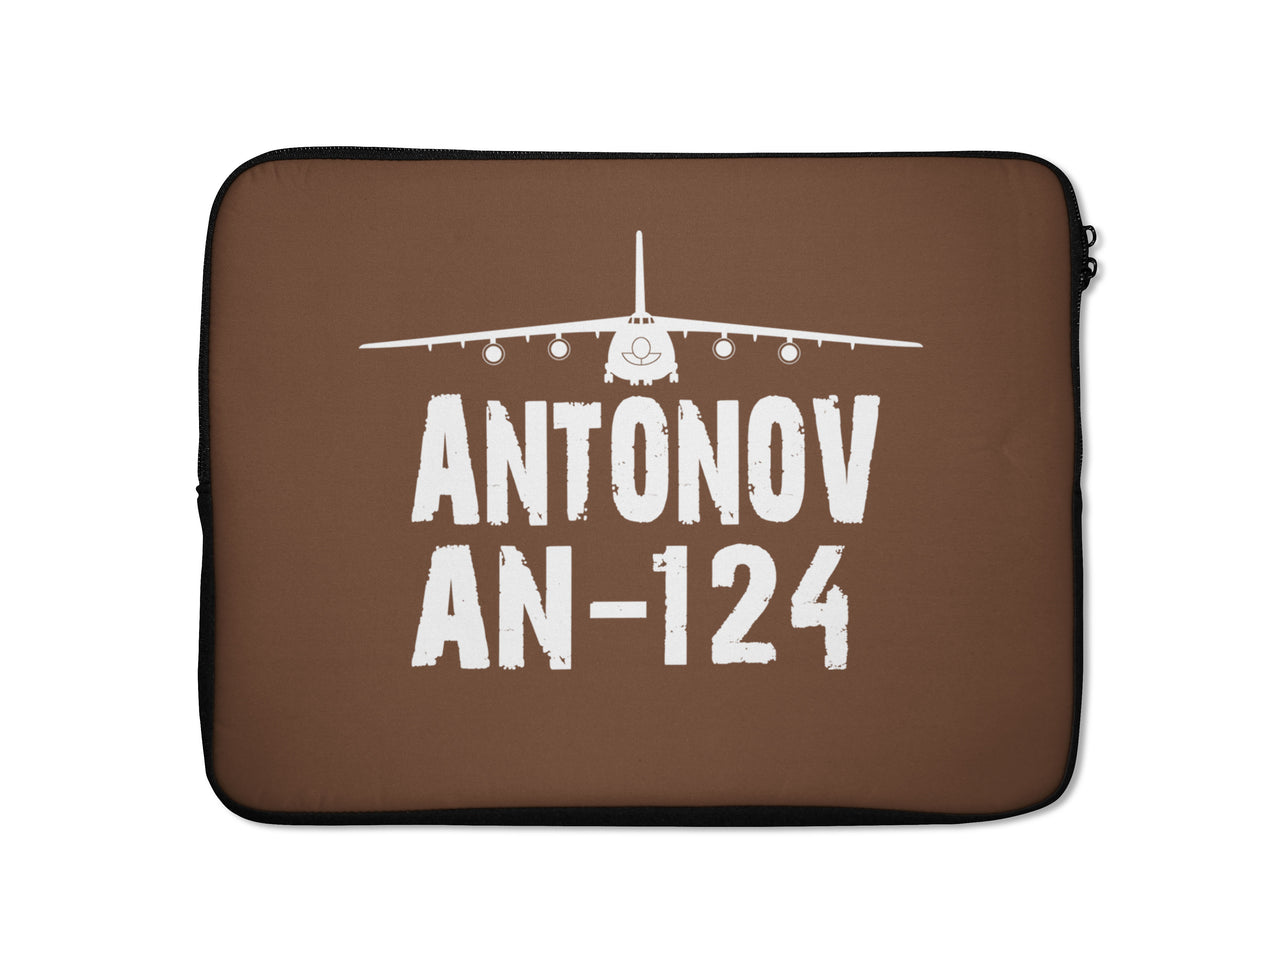 Antonov AN-124 & Plane Designed Laptop & Tablet Cases